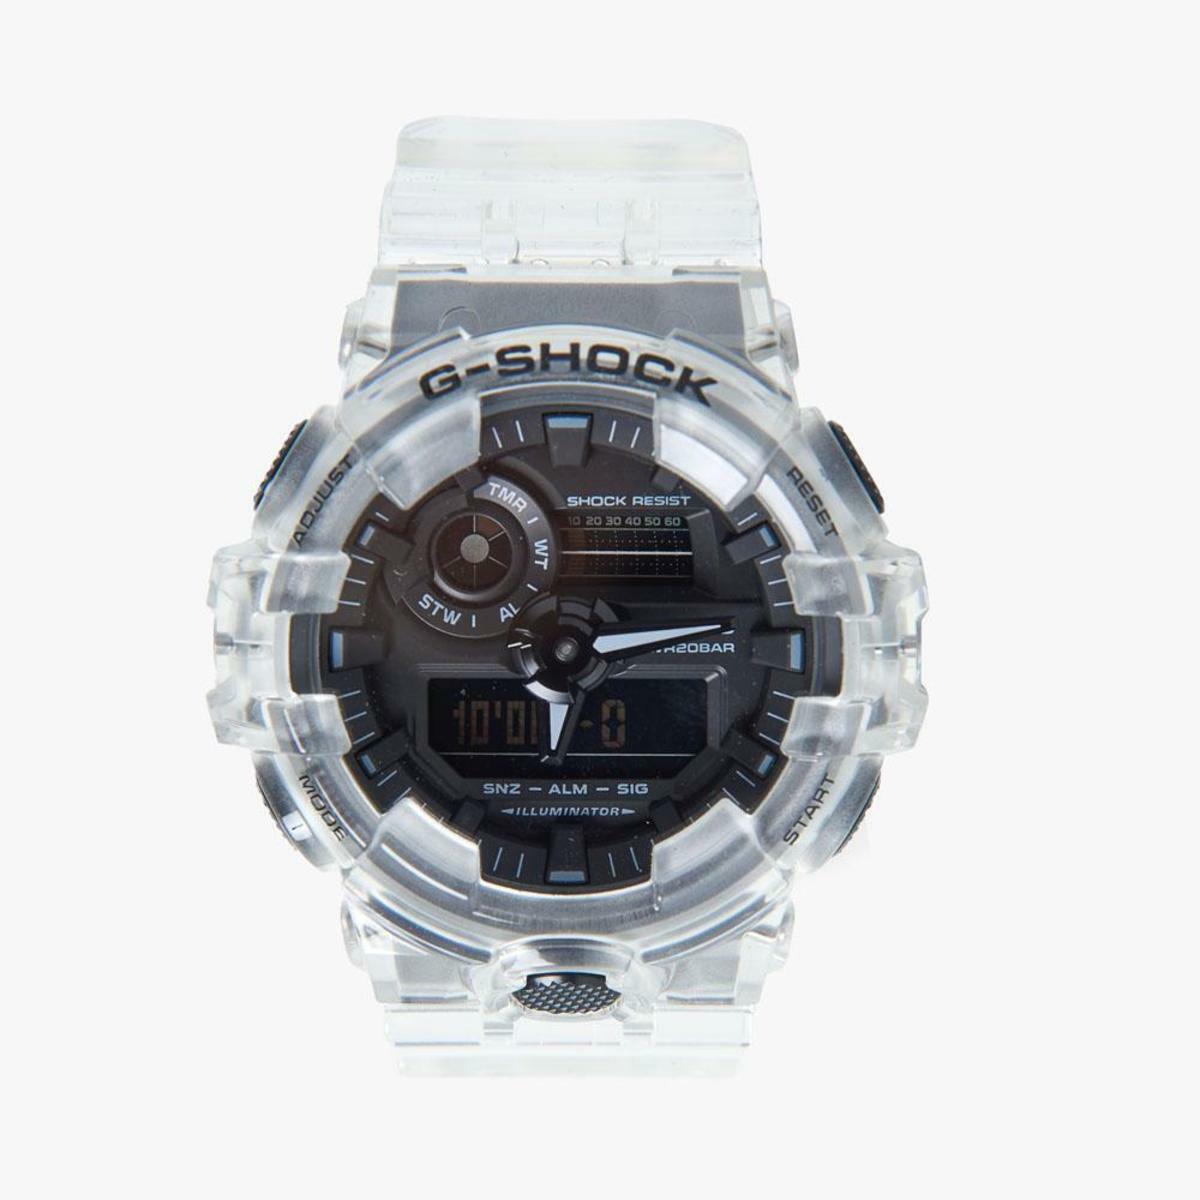 Casio G-shock Ana-digital Transparent Resin Strap Watch GA700SKE-7A